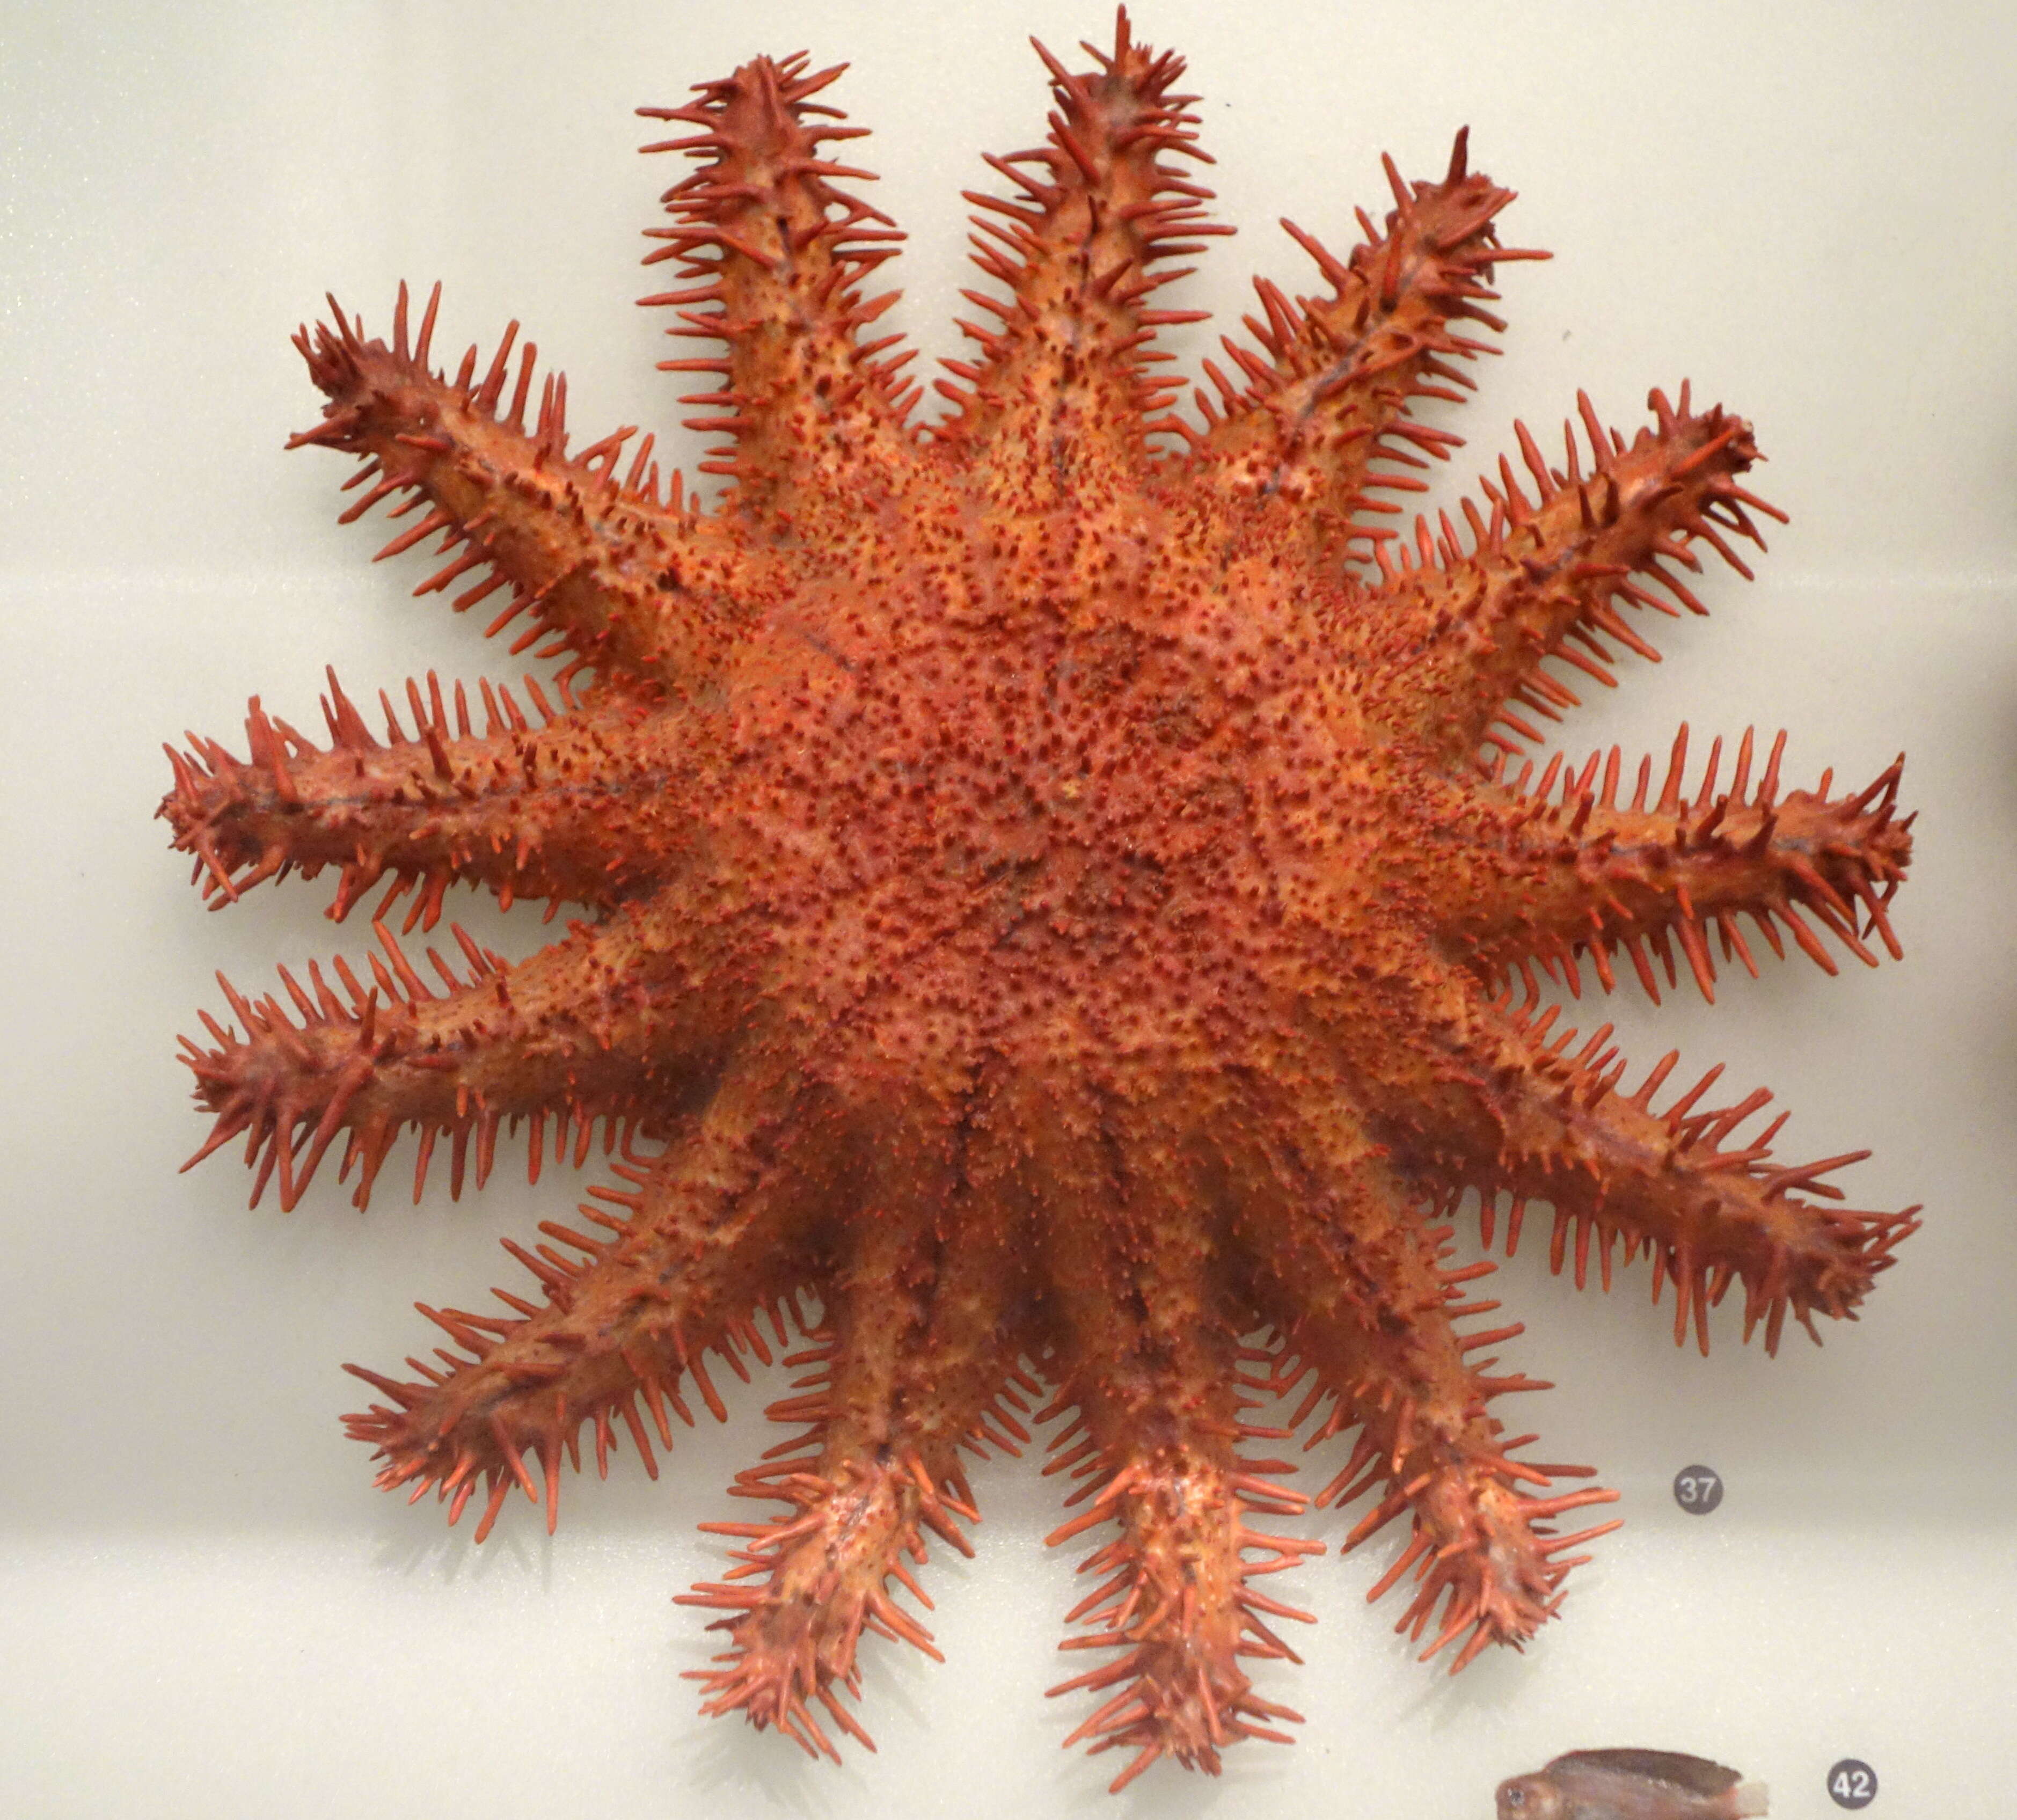 Image of crown-of-thorns starfish